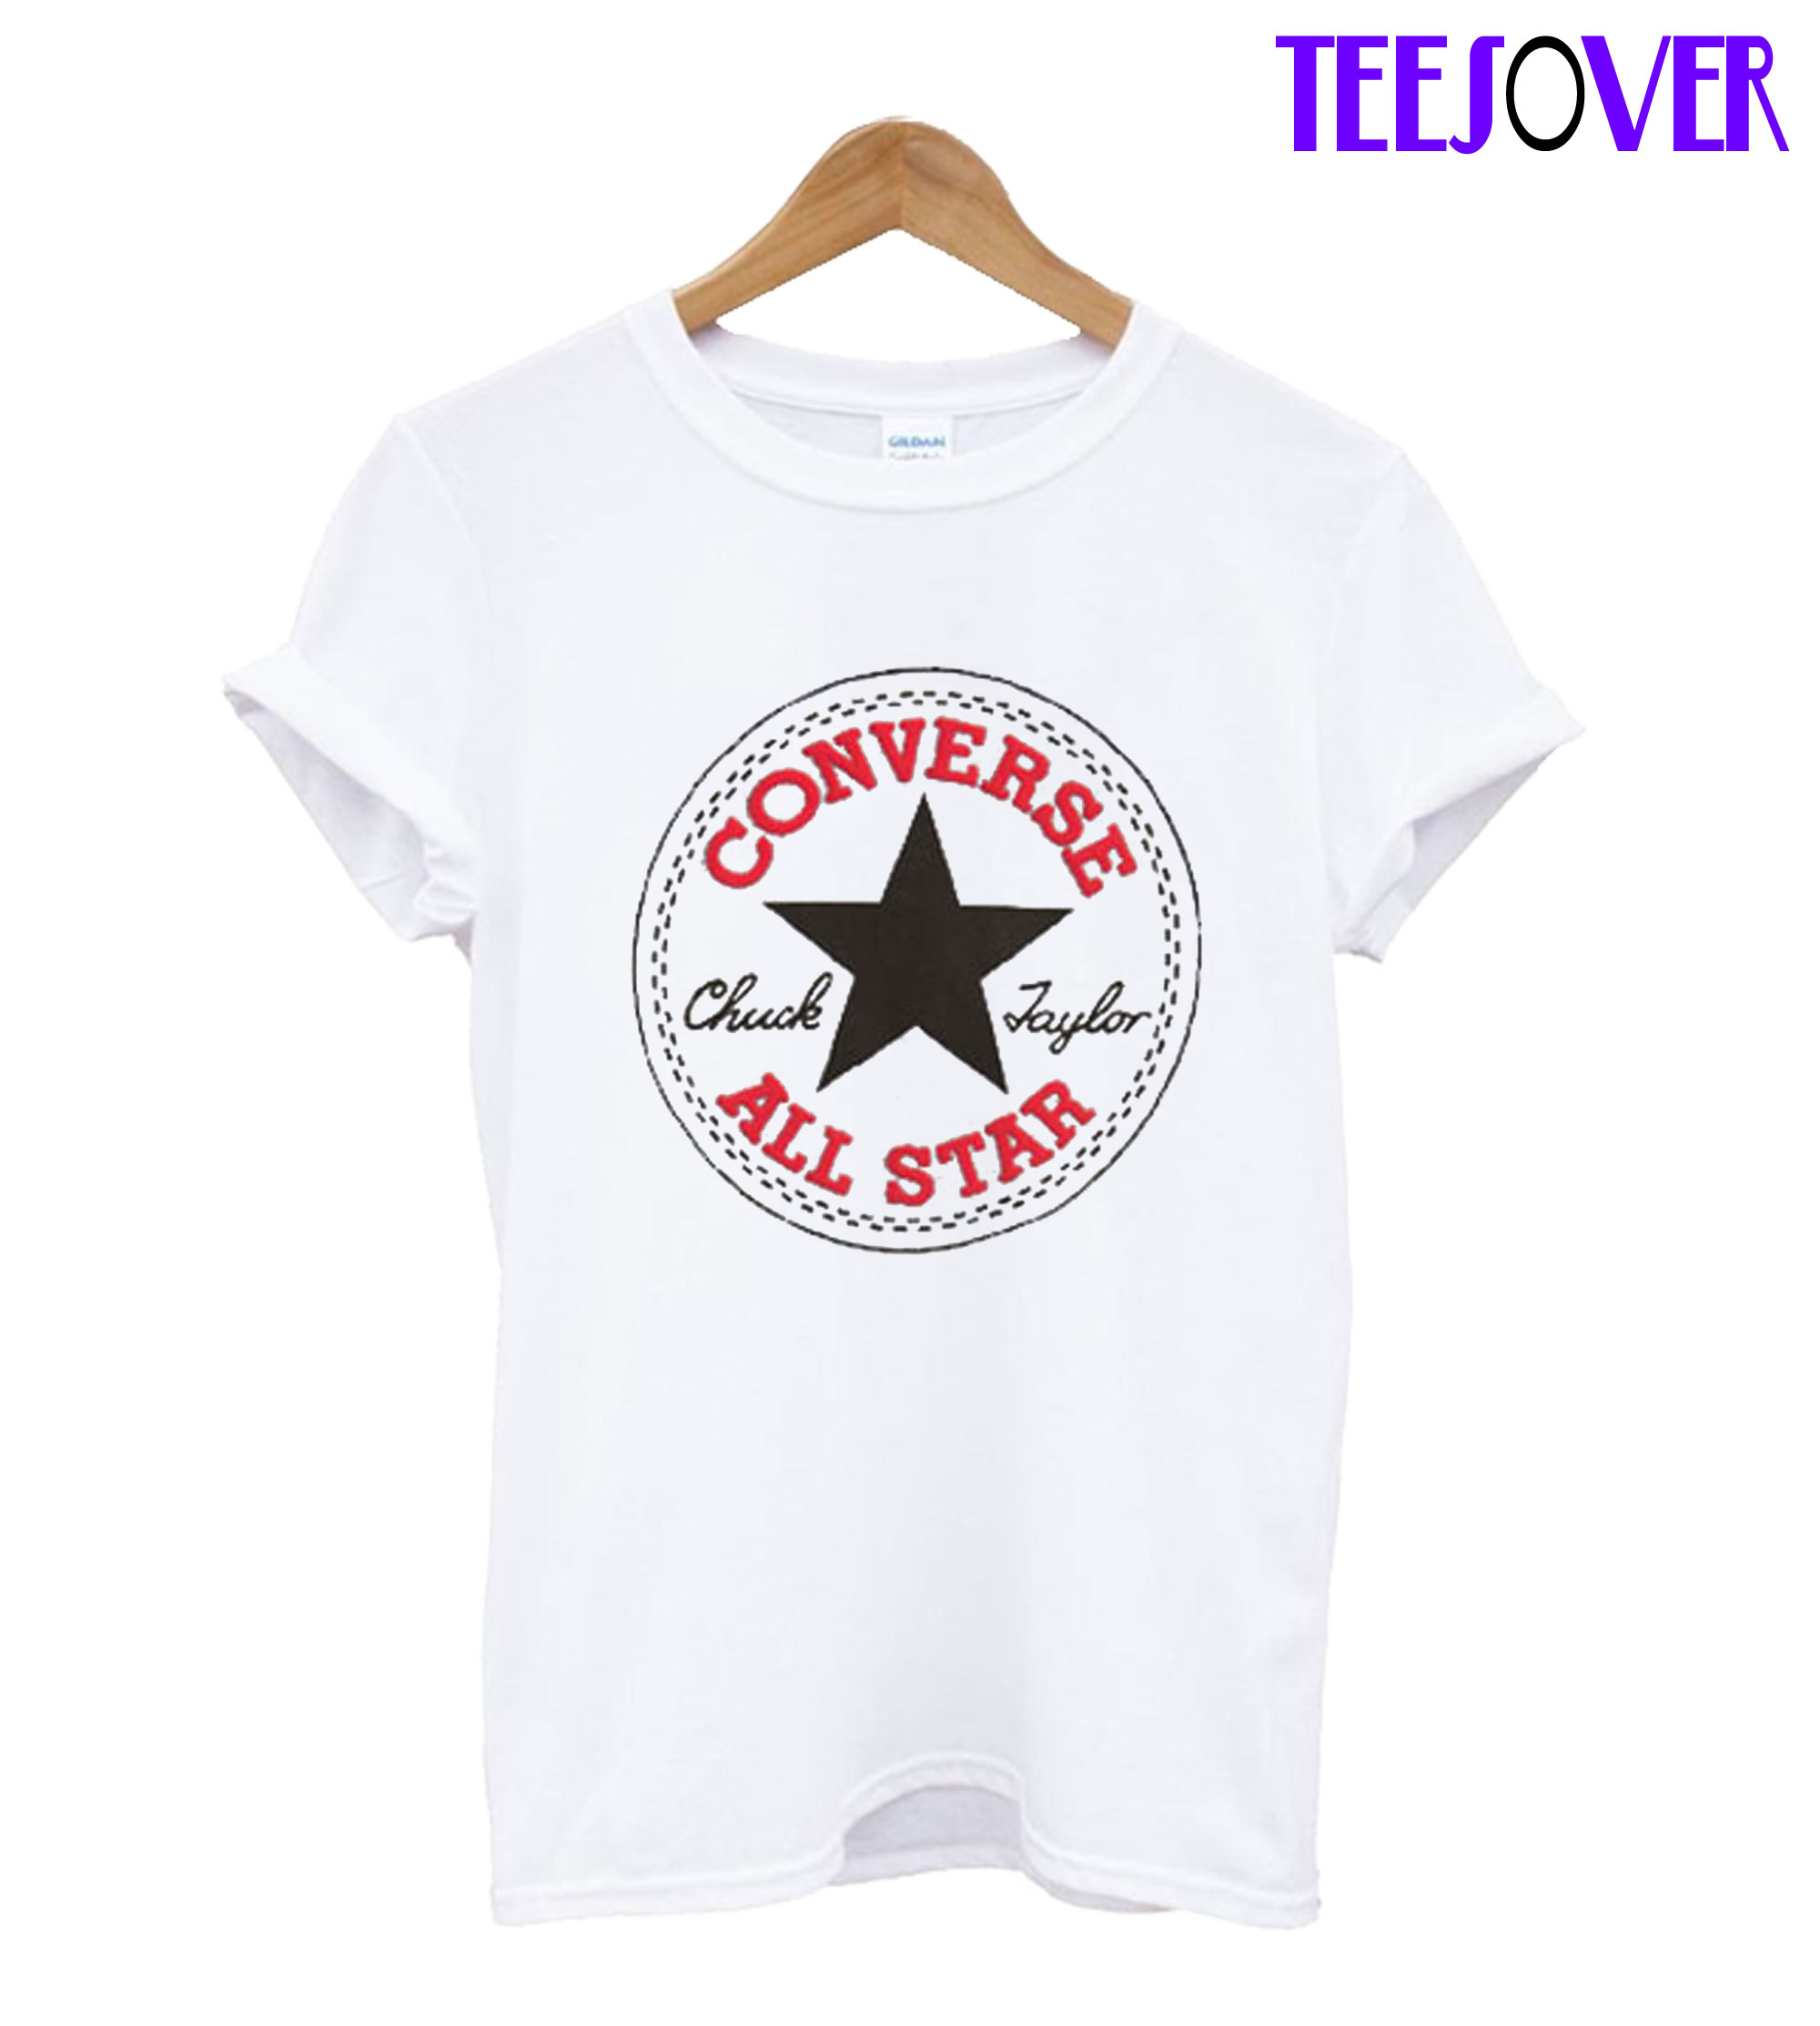 converse t shirts online